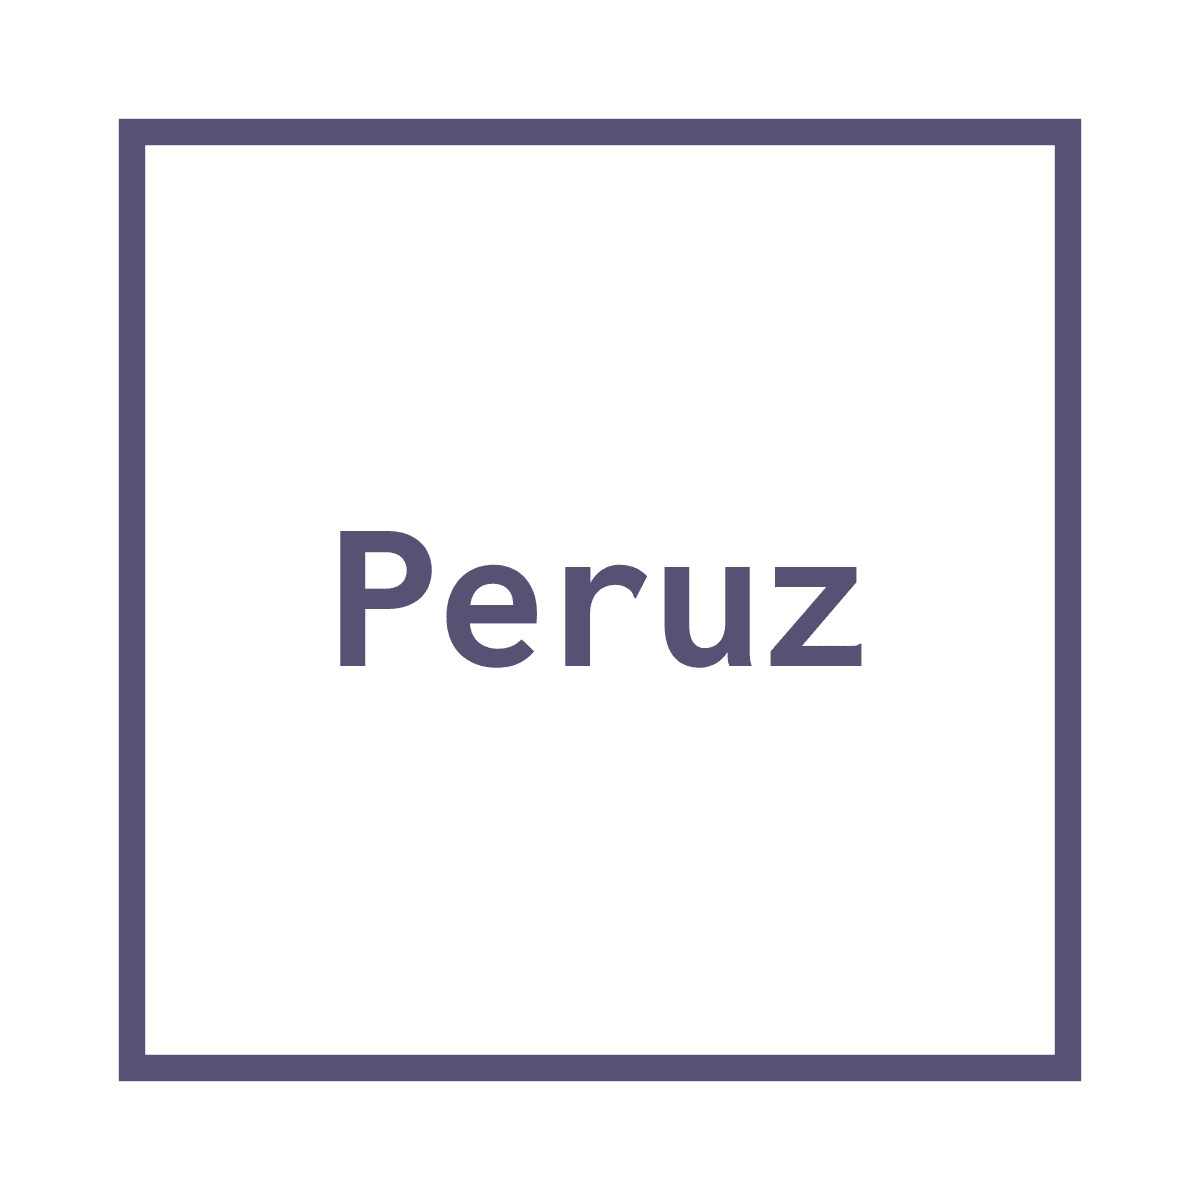 Peruz logo